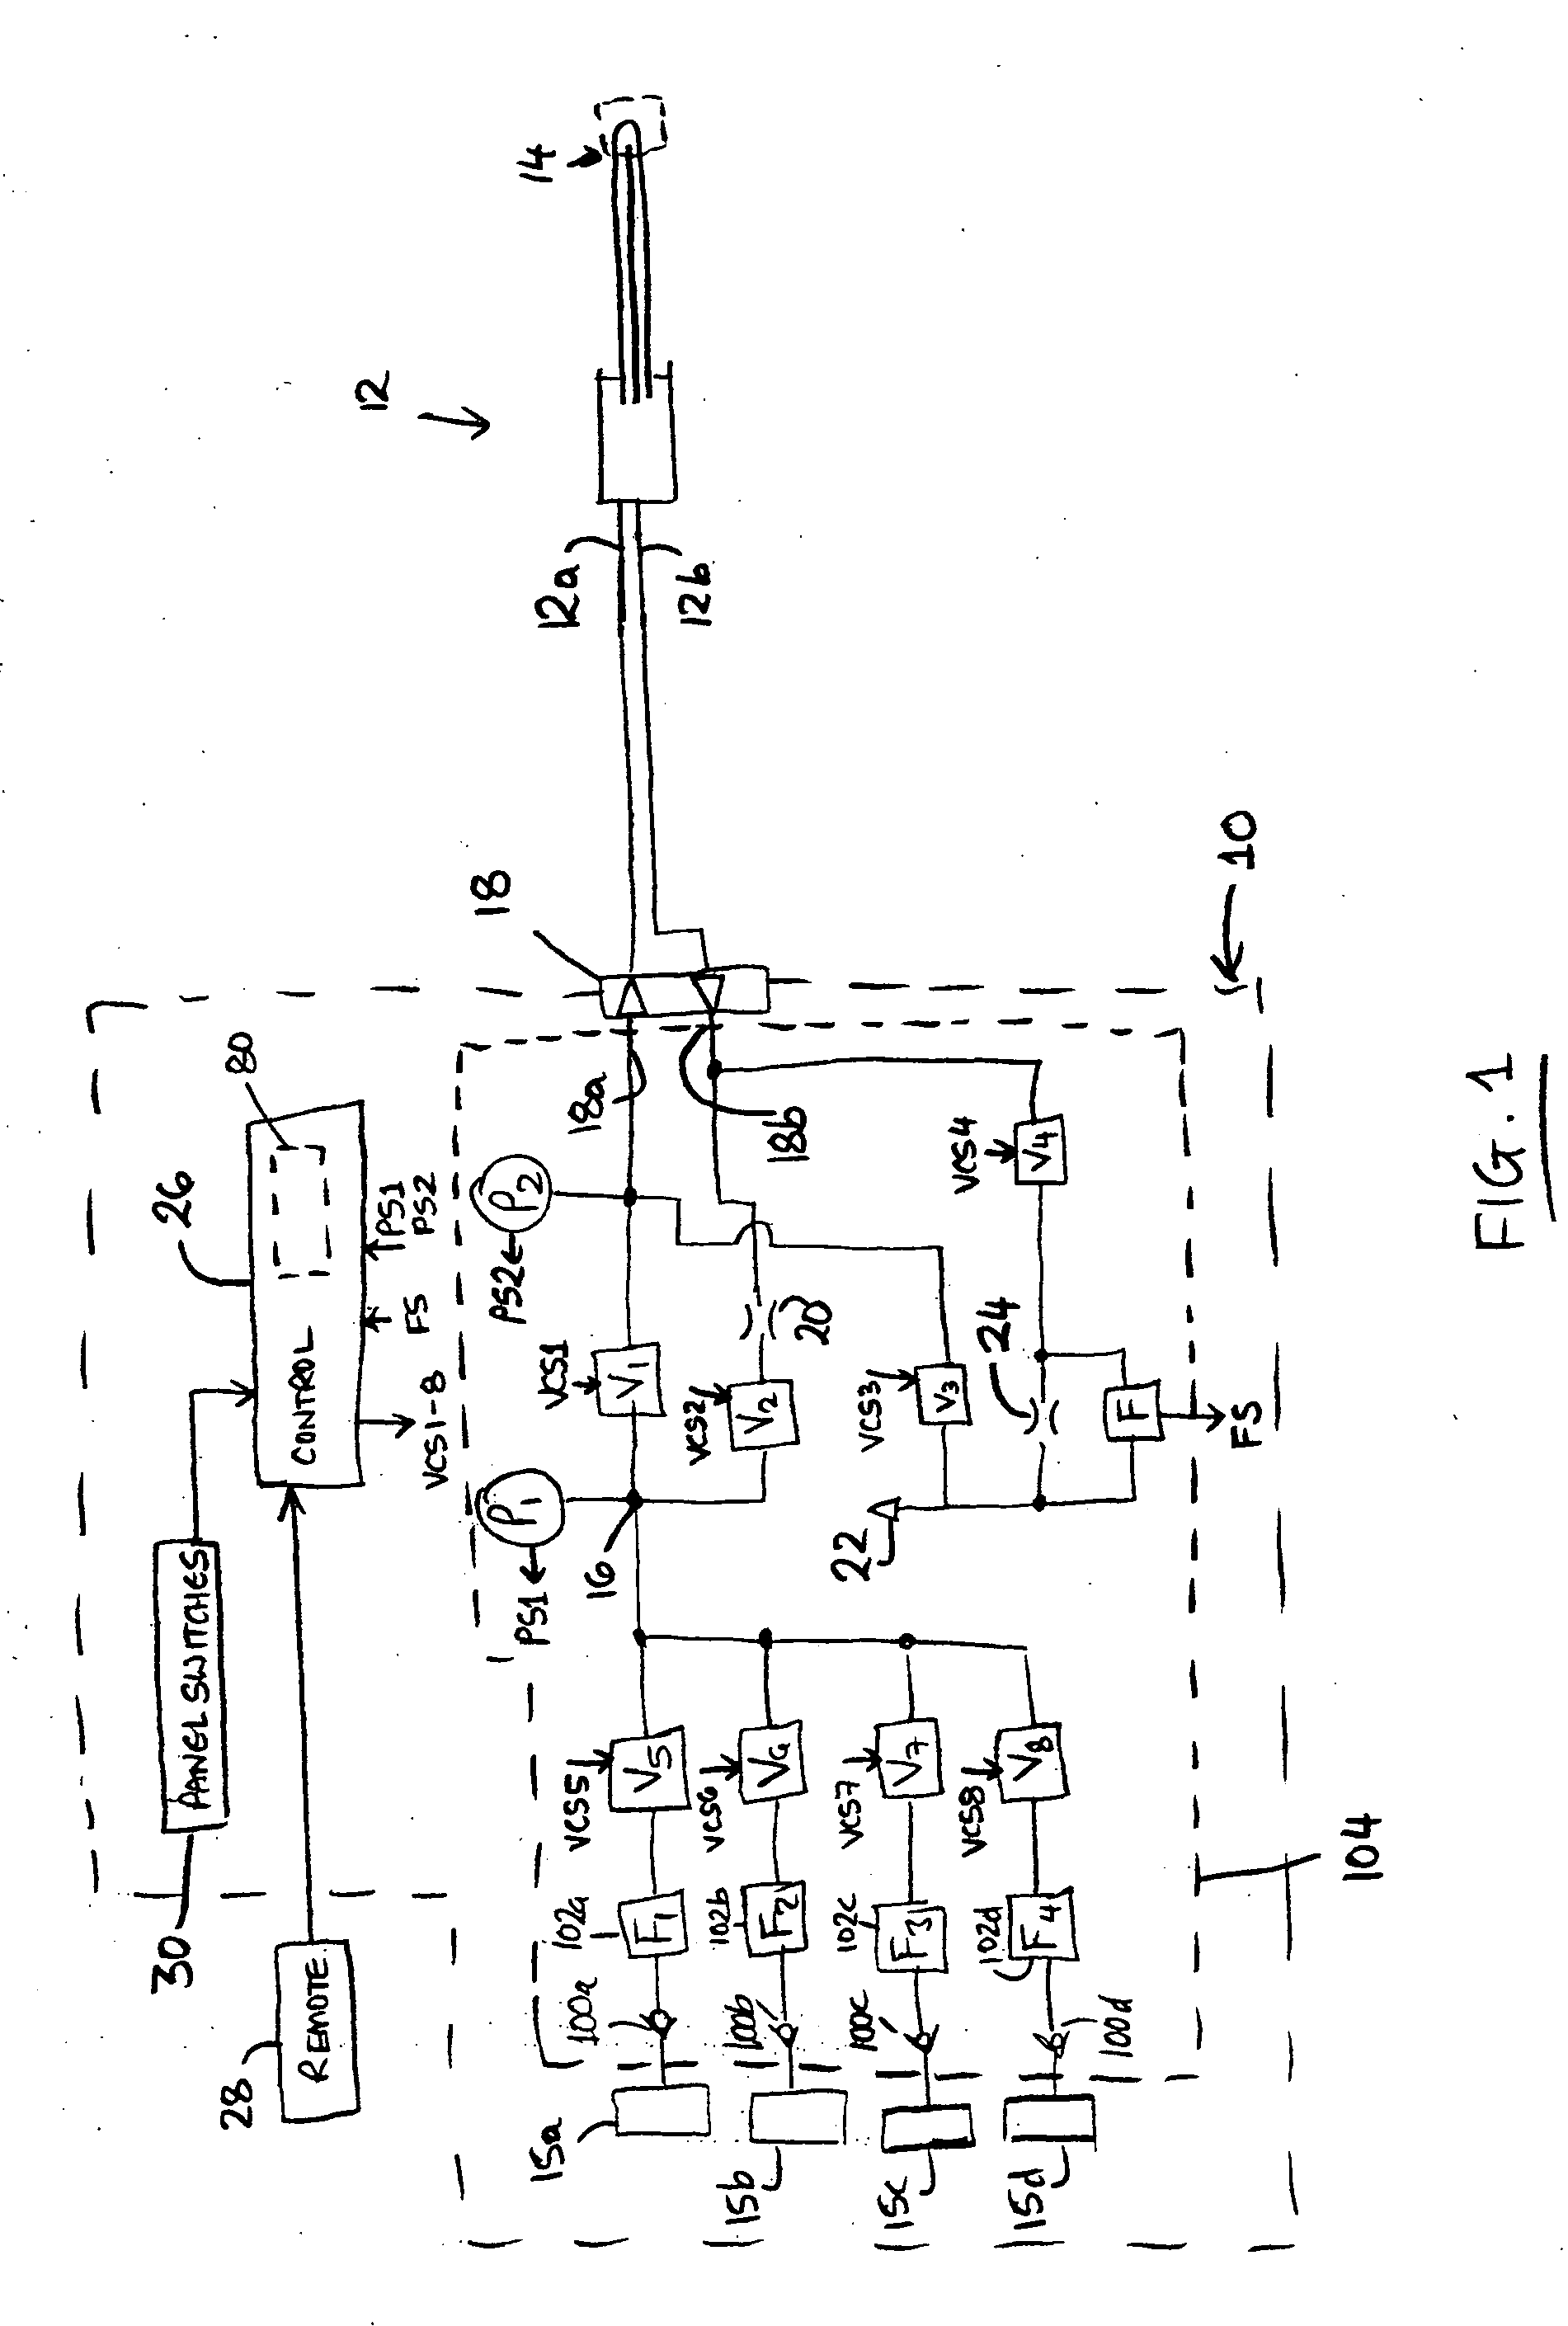 Method and apparatus for supplying refrigerant fluid